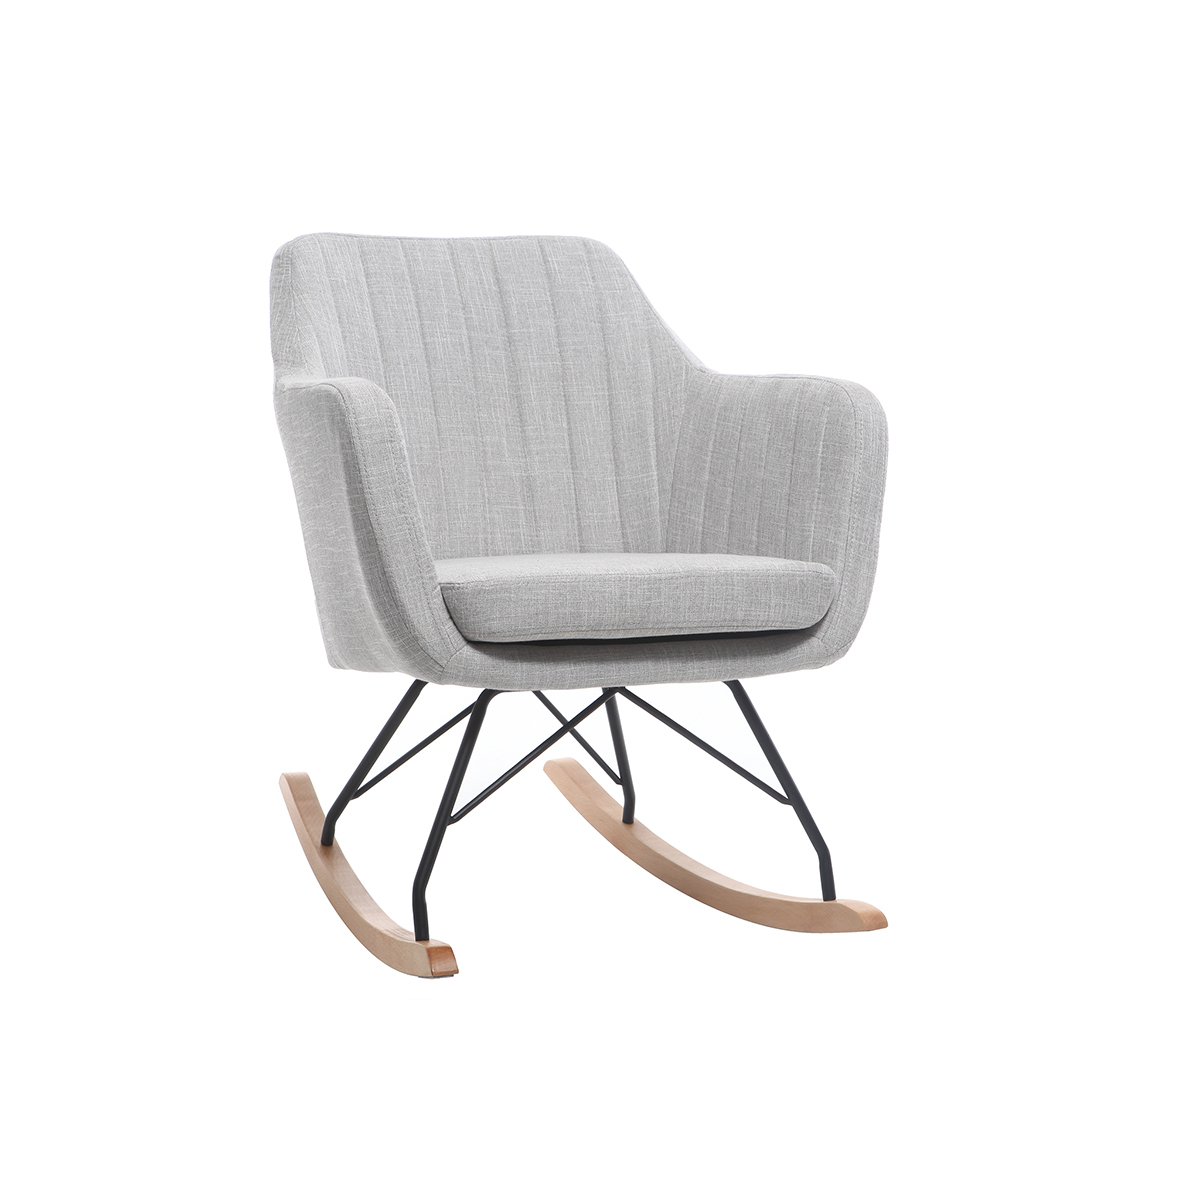 Rocking chair scandinave en tissu gris clair, métal noir et bois clair ALEYNA vue1